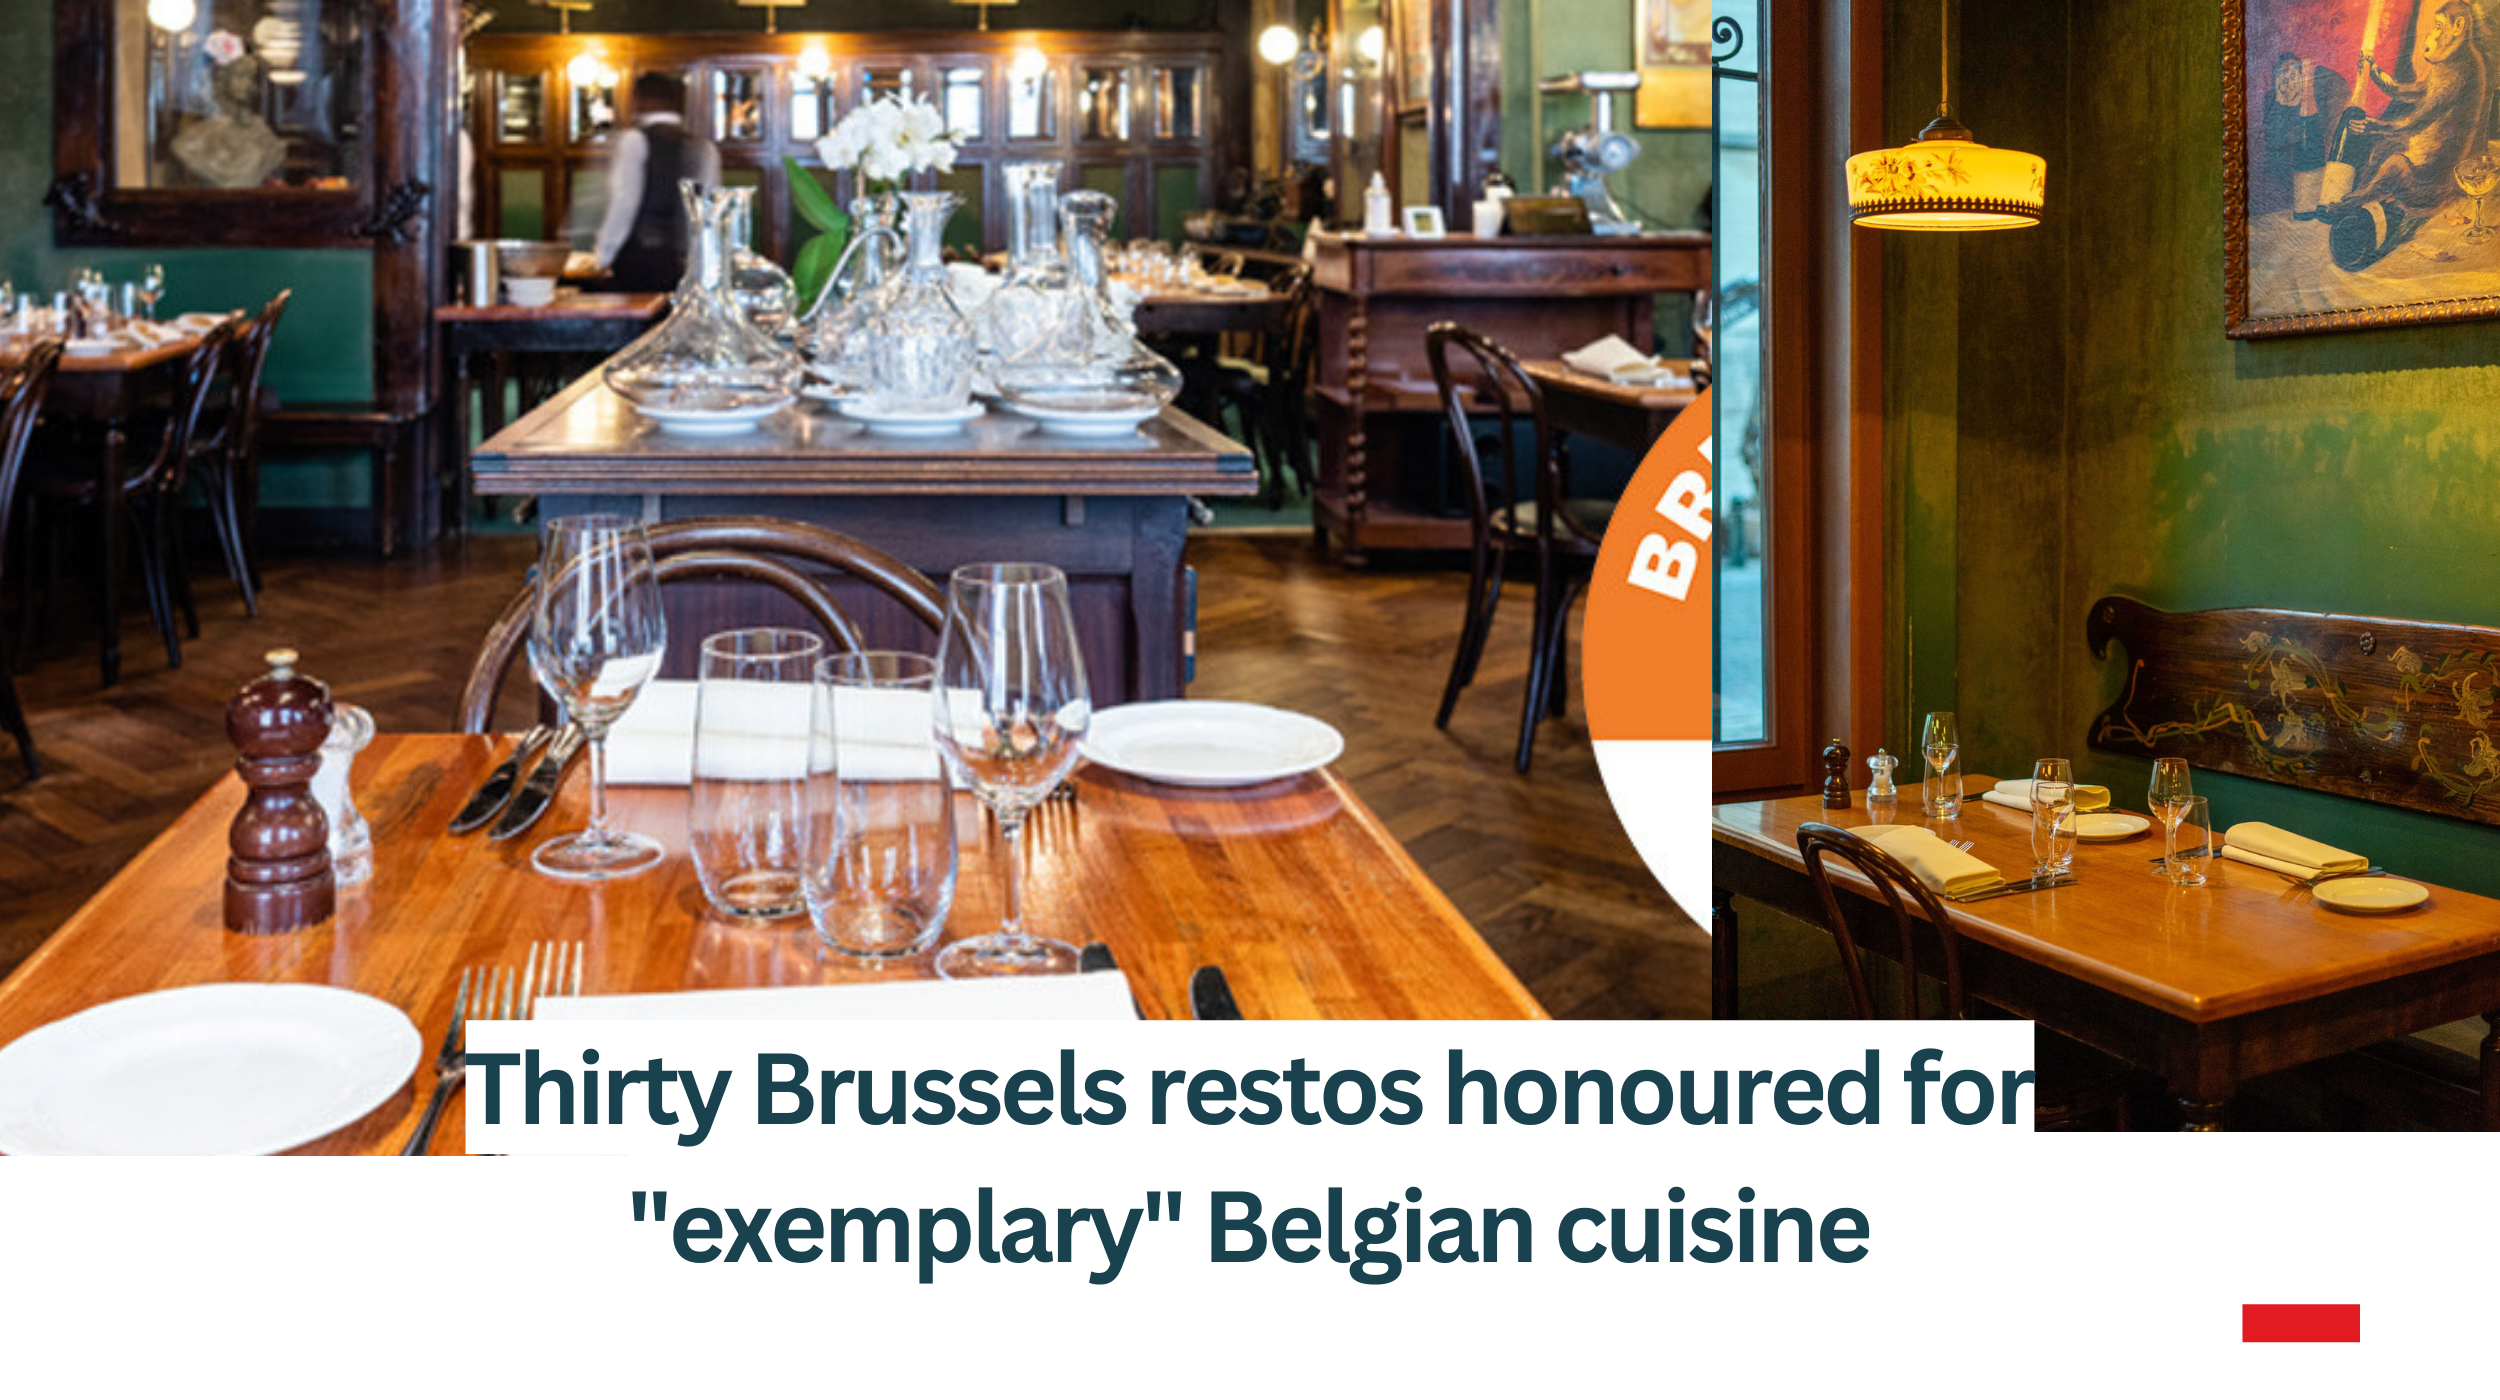 Thirty-Brussels-restos-honoured-for-exemplary-Belgian-cuisine